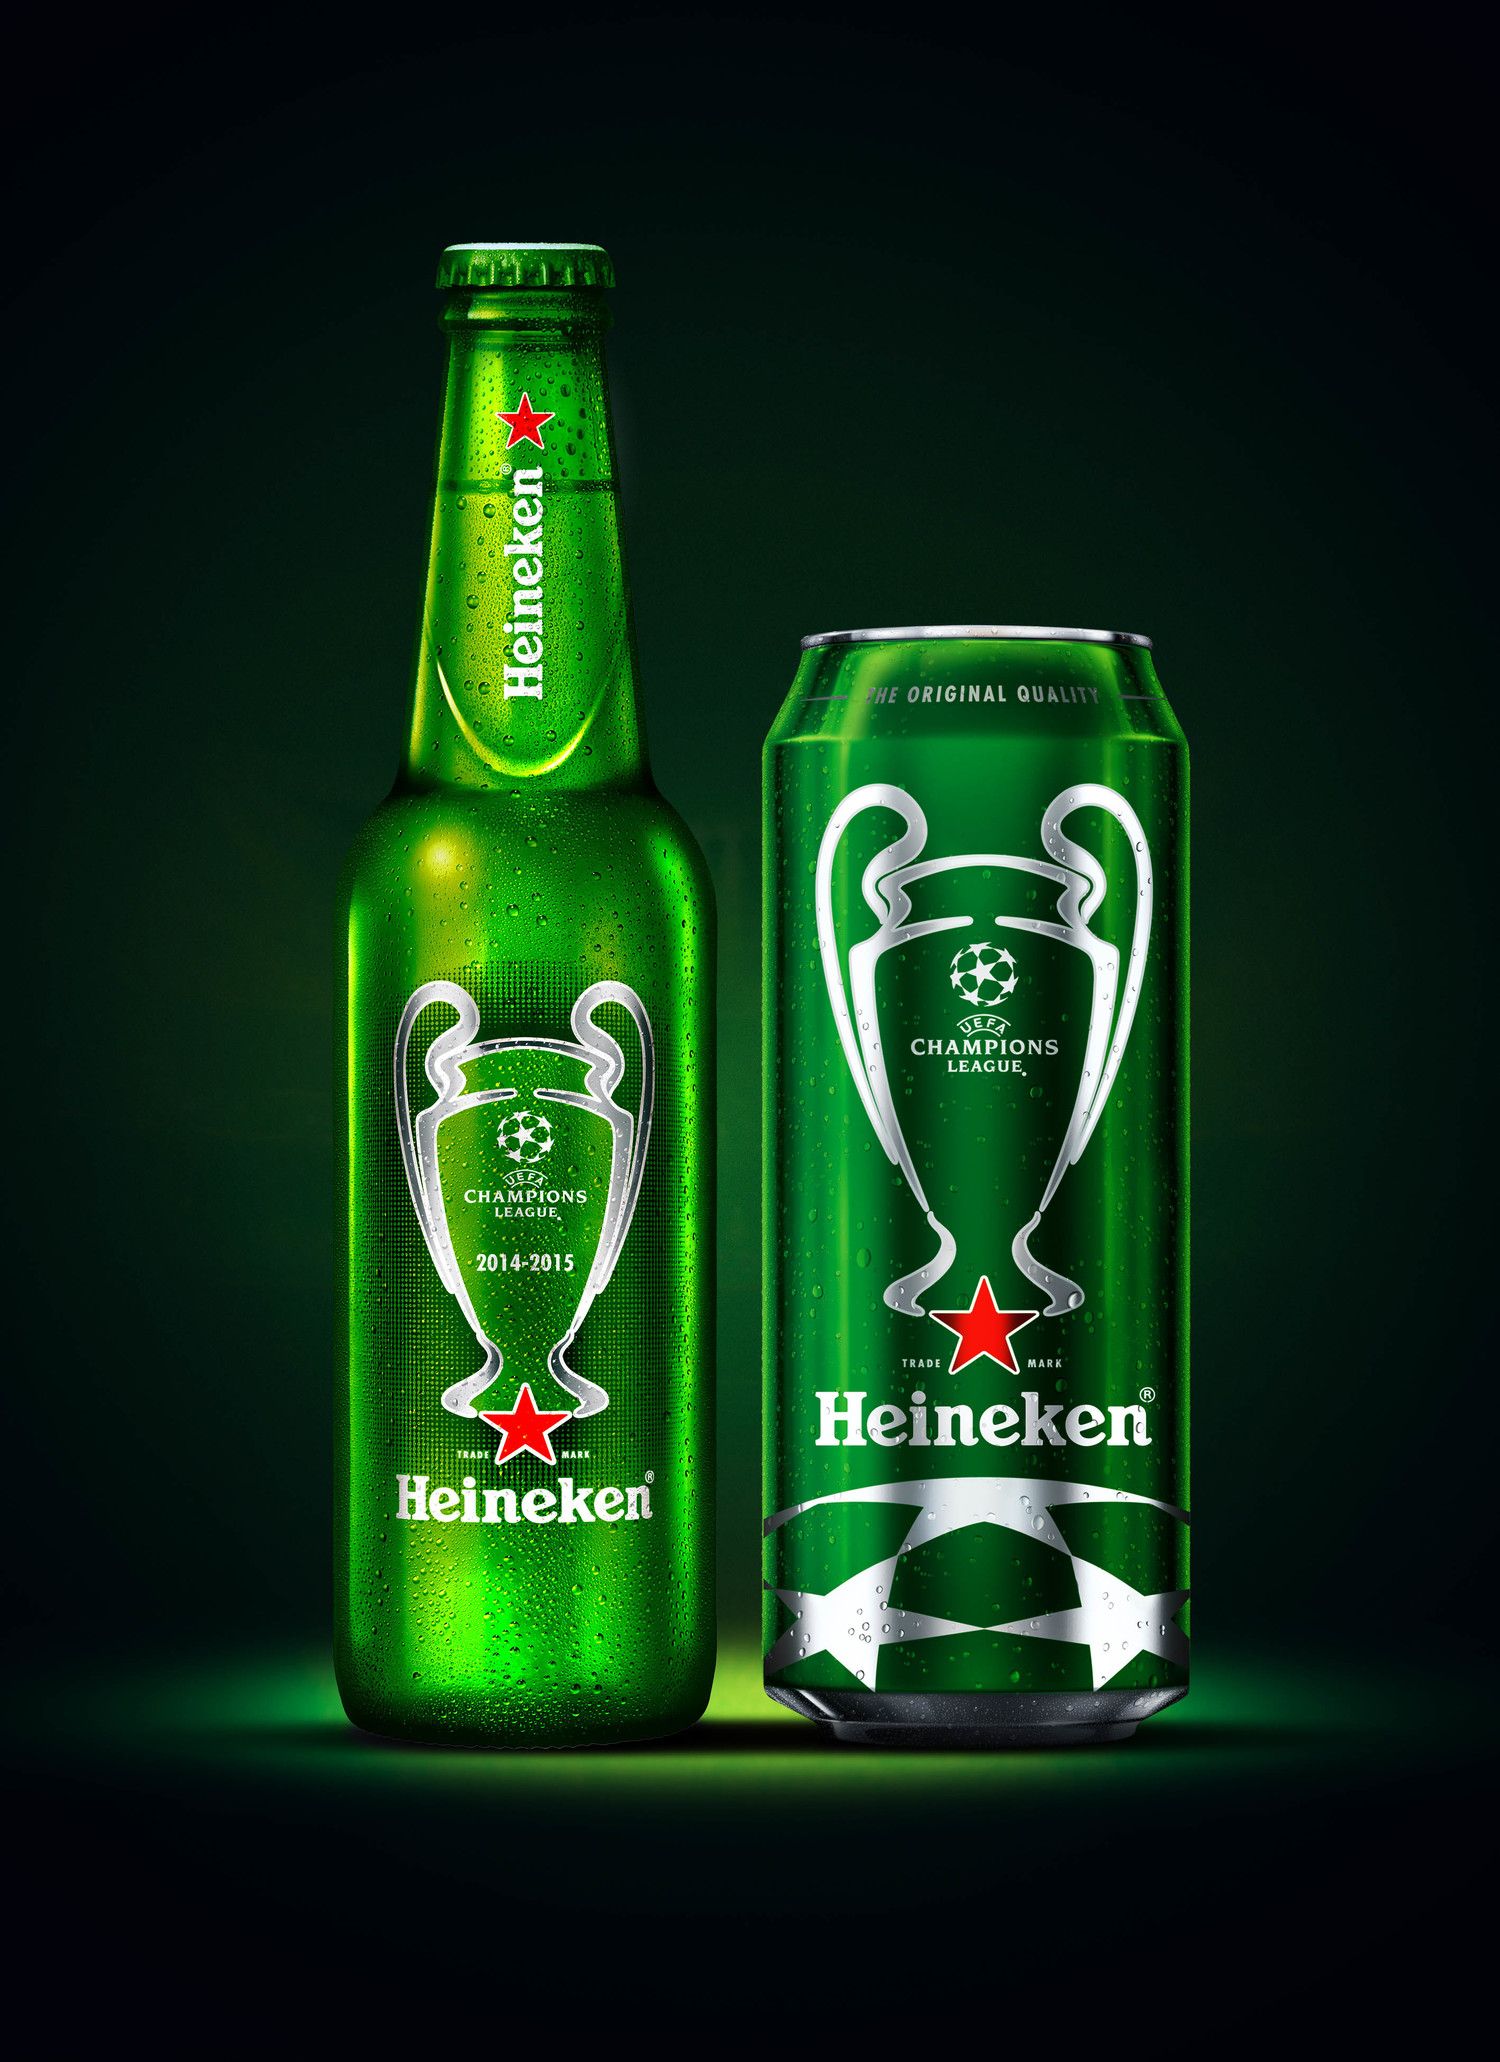 Heineken UEFA Champions League Beer. Heineken, Champions league, Heineken beer